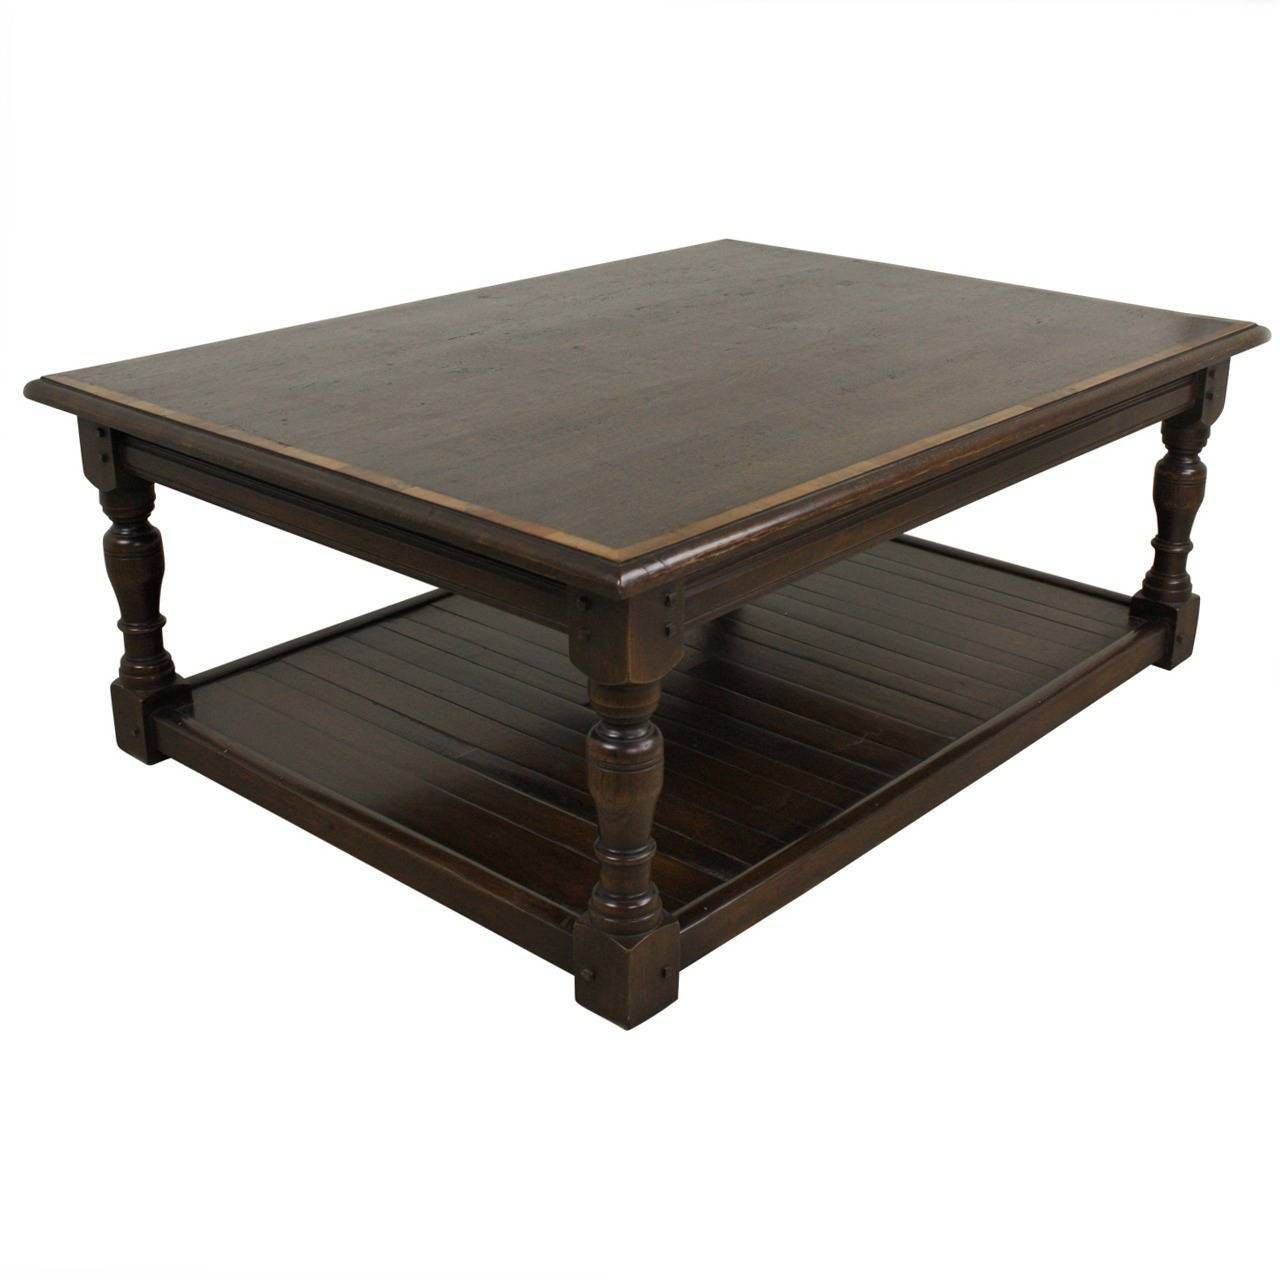 Dark Oak English Potboard Coffee Table For Sale At 1stdibs Inside Dark Oak Coffee Tables (View 1 of 15)